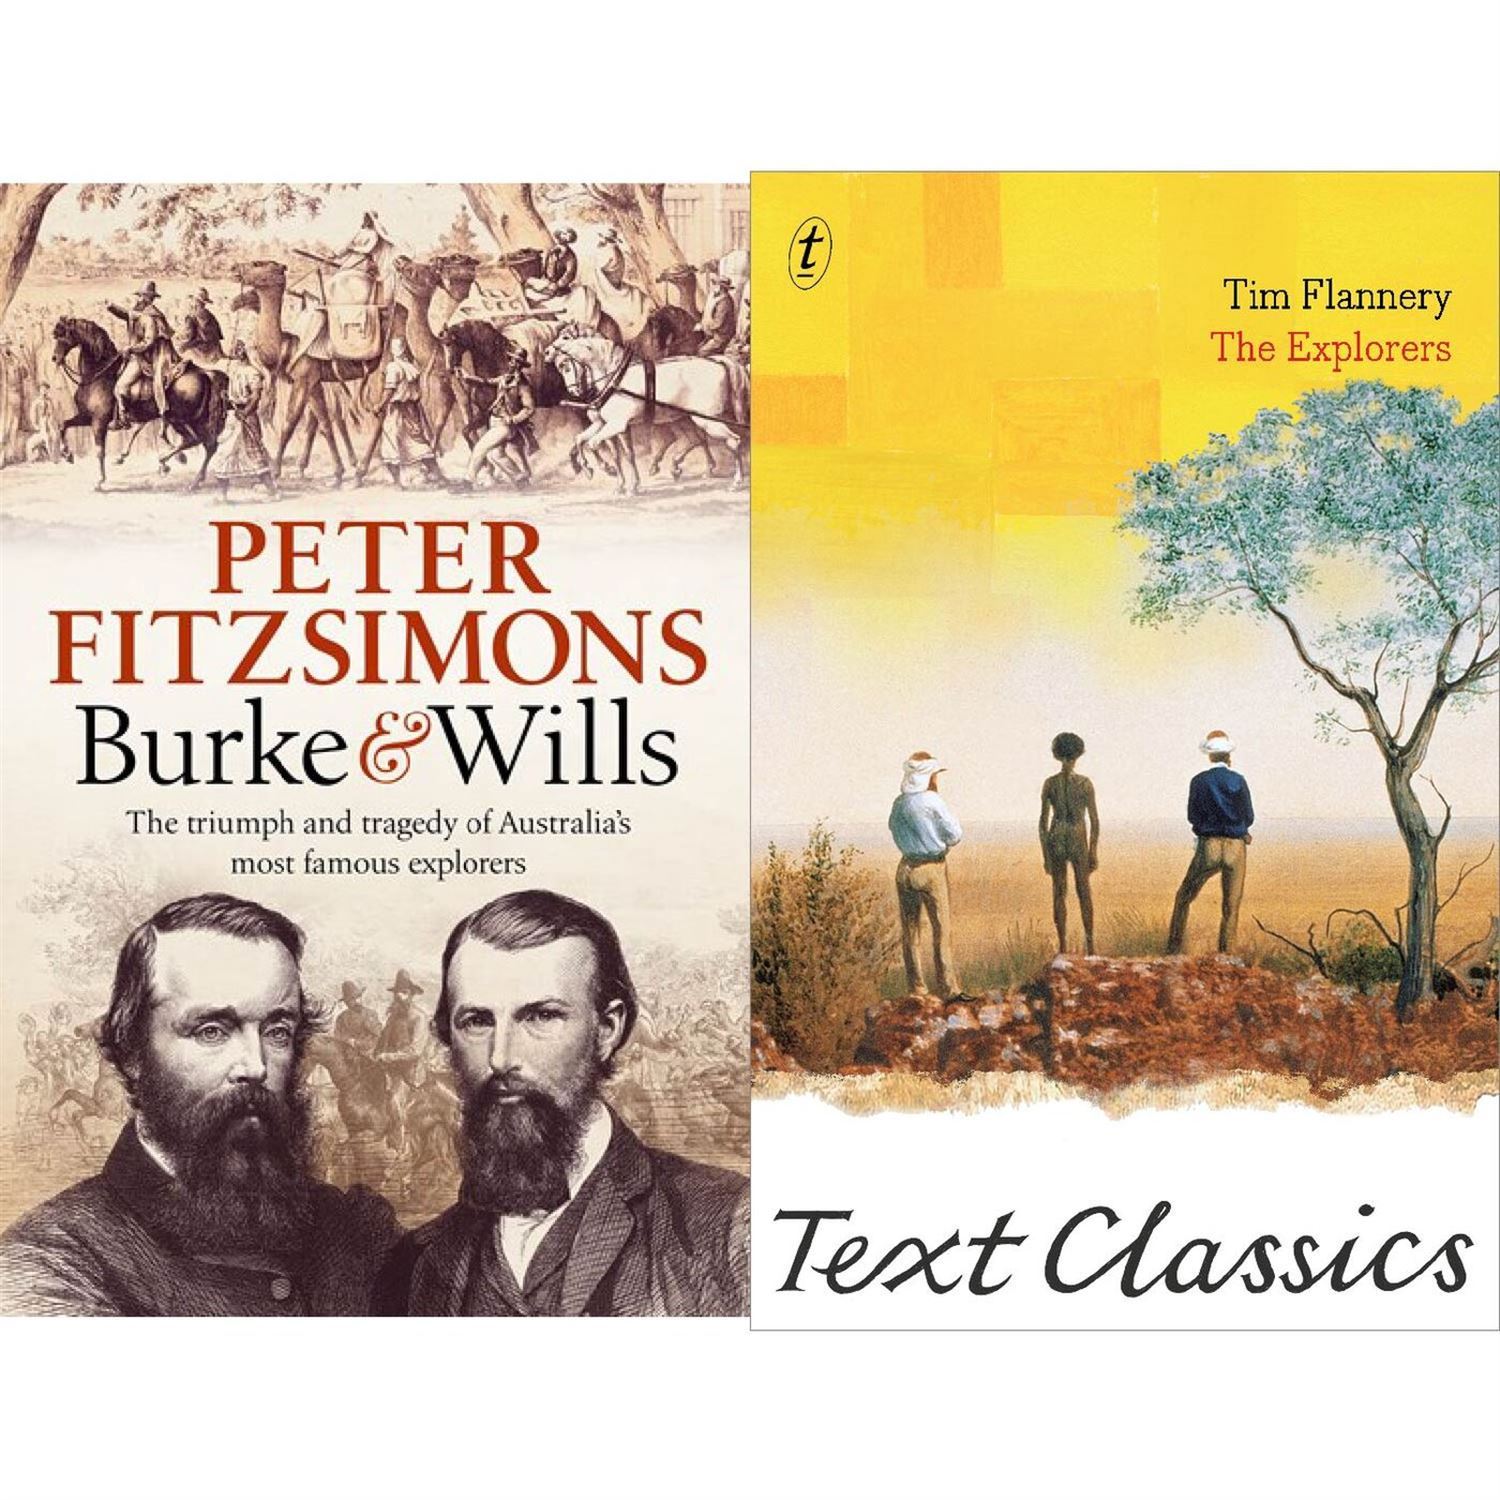 Books on Australian explorers